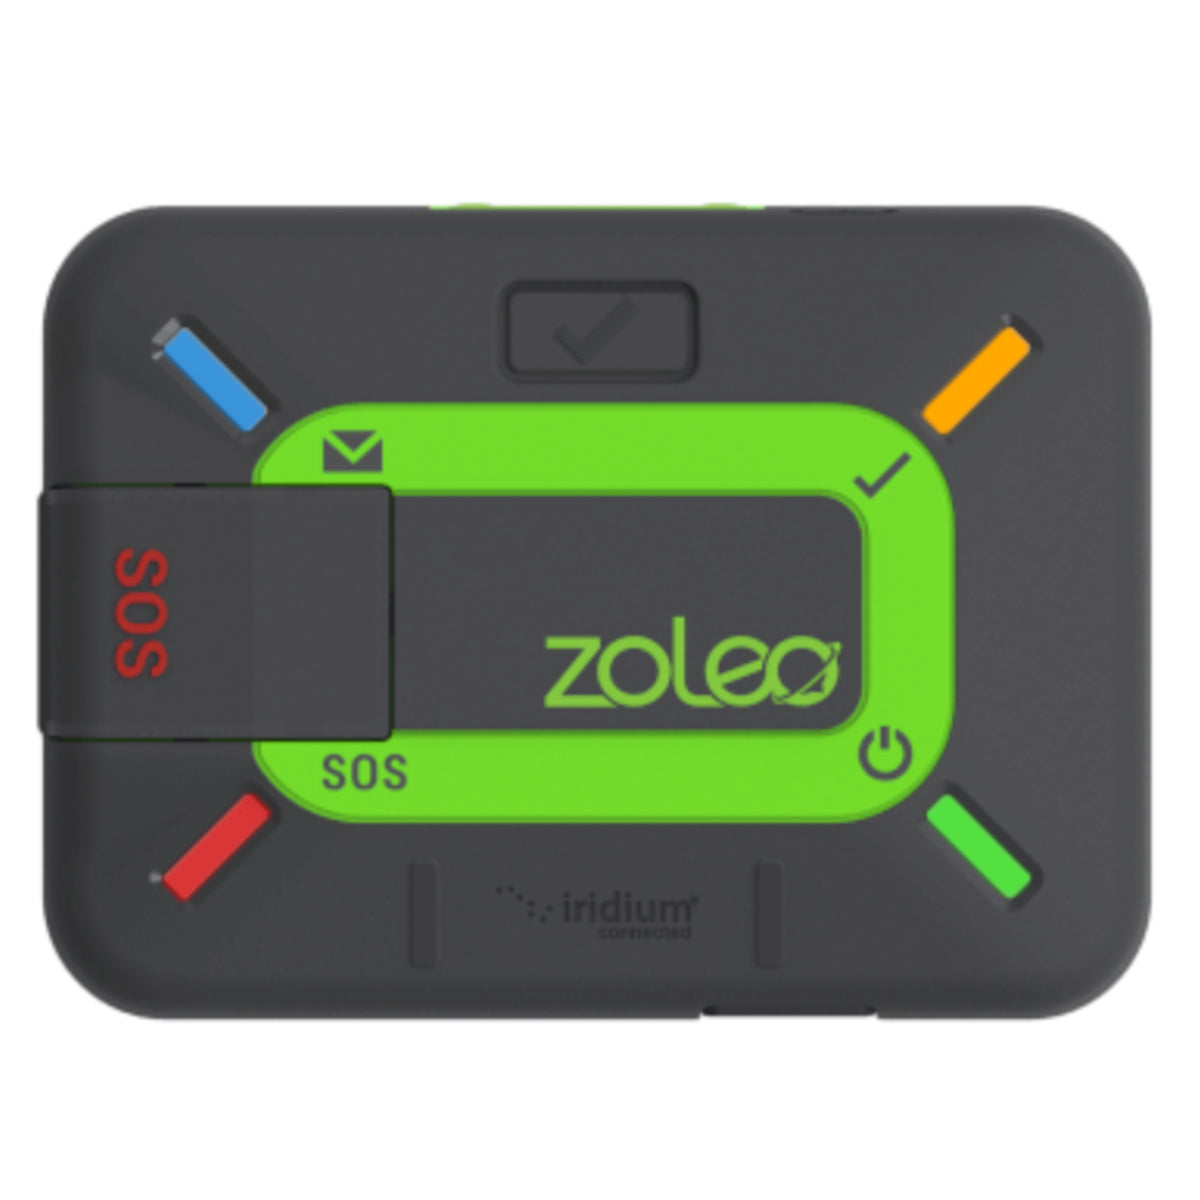 Zoleo Satellite Communicator in  by GOHUNT | Zoleo - GOHUNT Shop